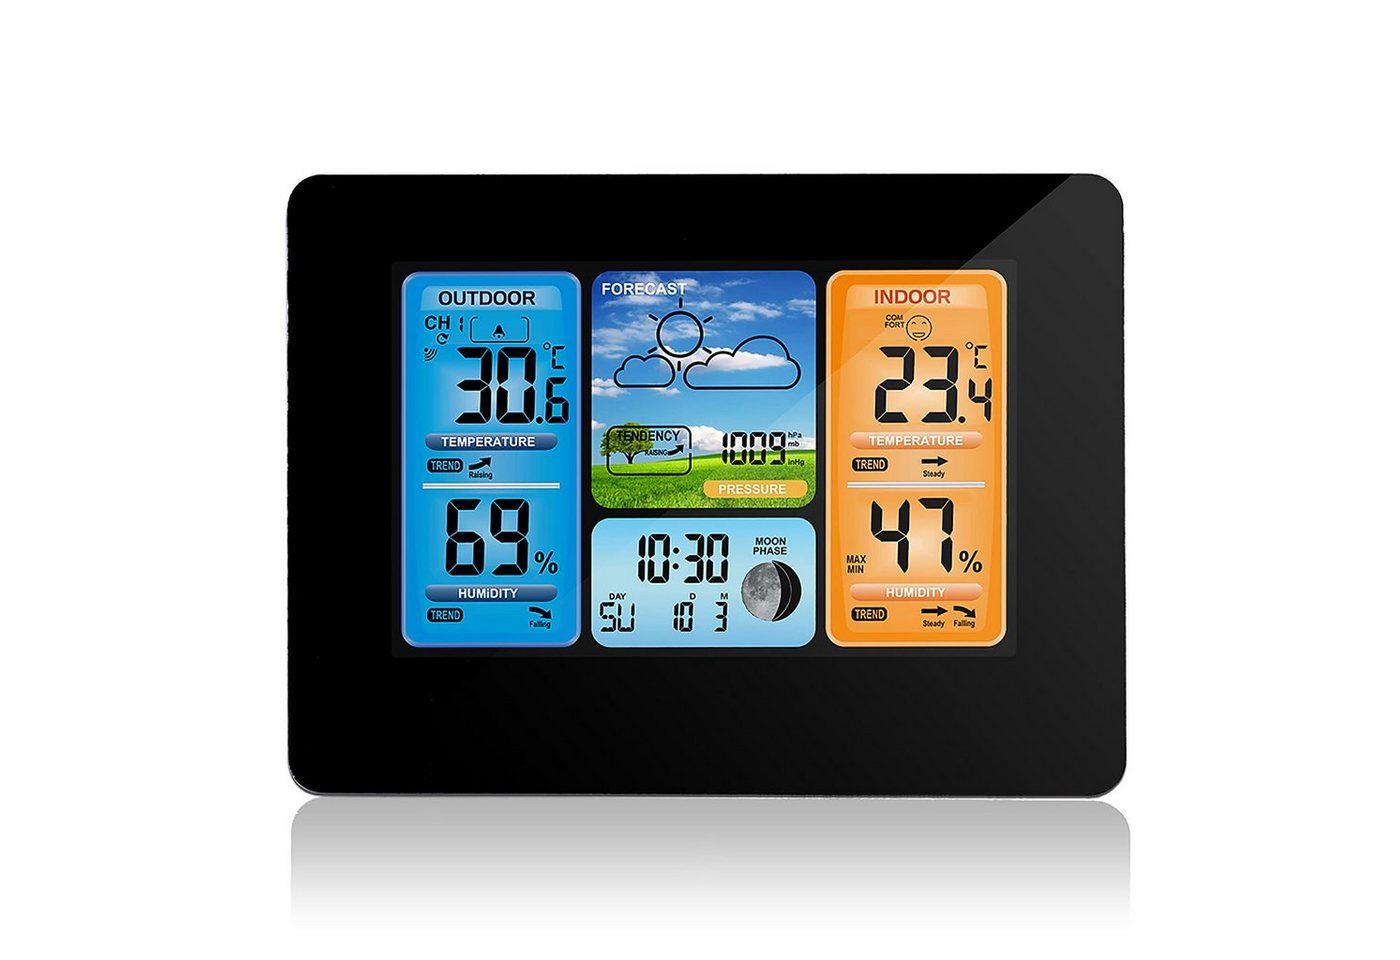 BlingBin Farbdisplay Digitale Wecker Thermometer Innen-Außensensor Uhr Funkwetterstation (Mit Außensensor, Wetterstation Funk mit Außensensor) von BlingBin